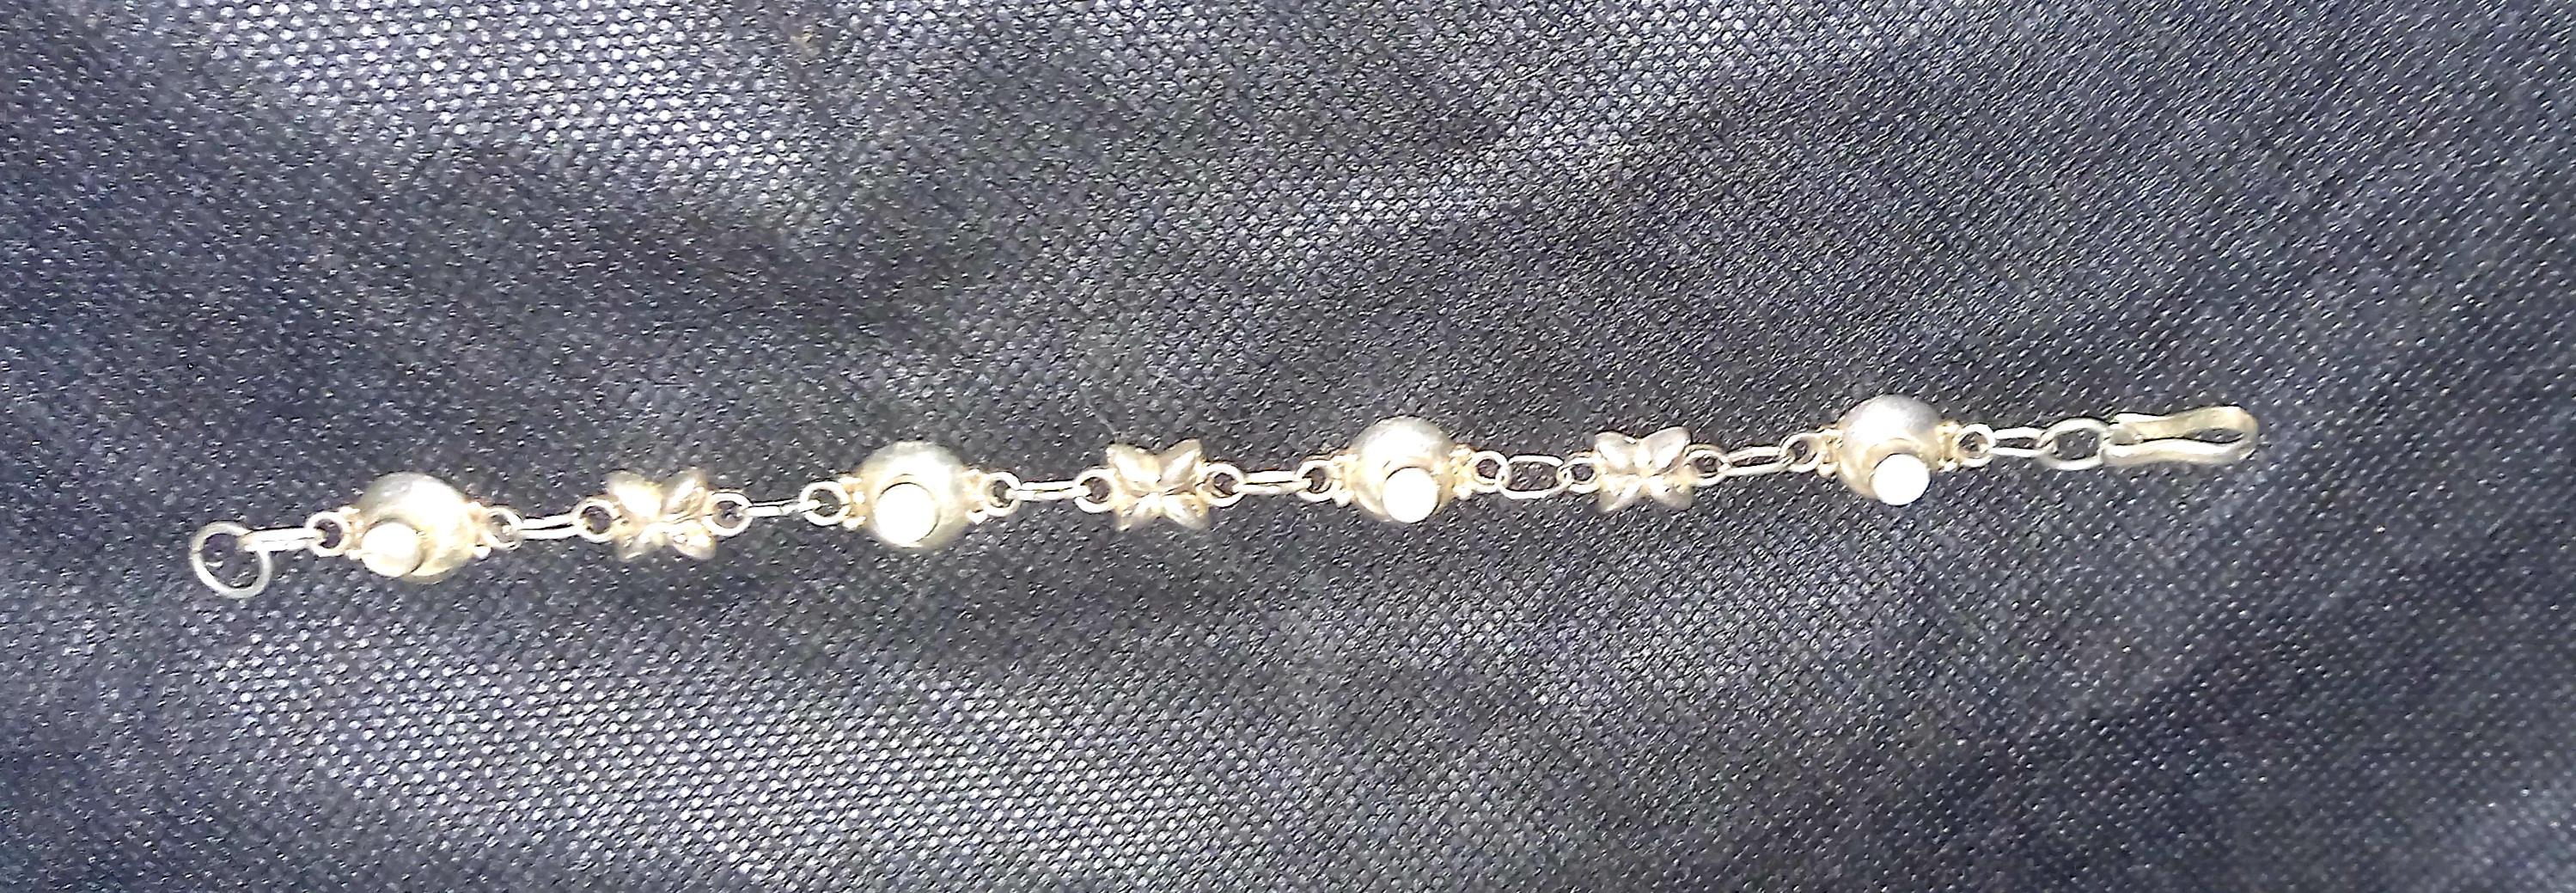 925 Silver Bracelet